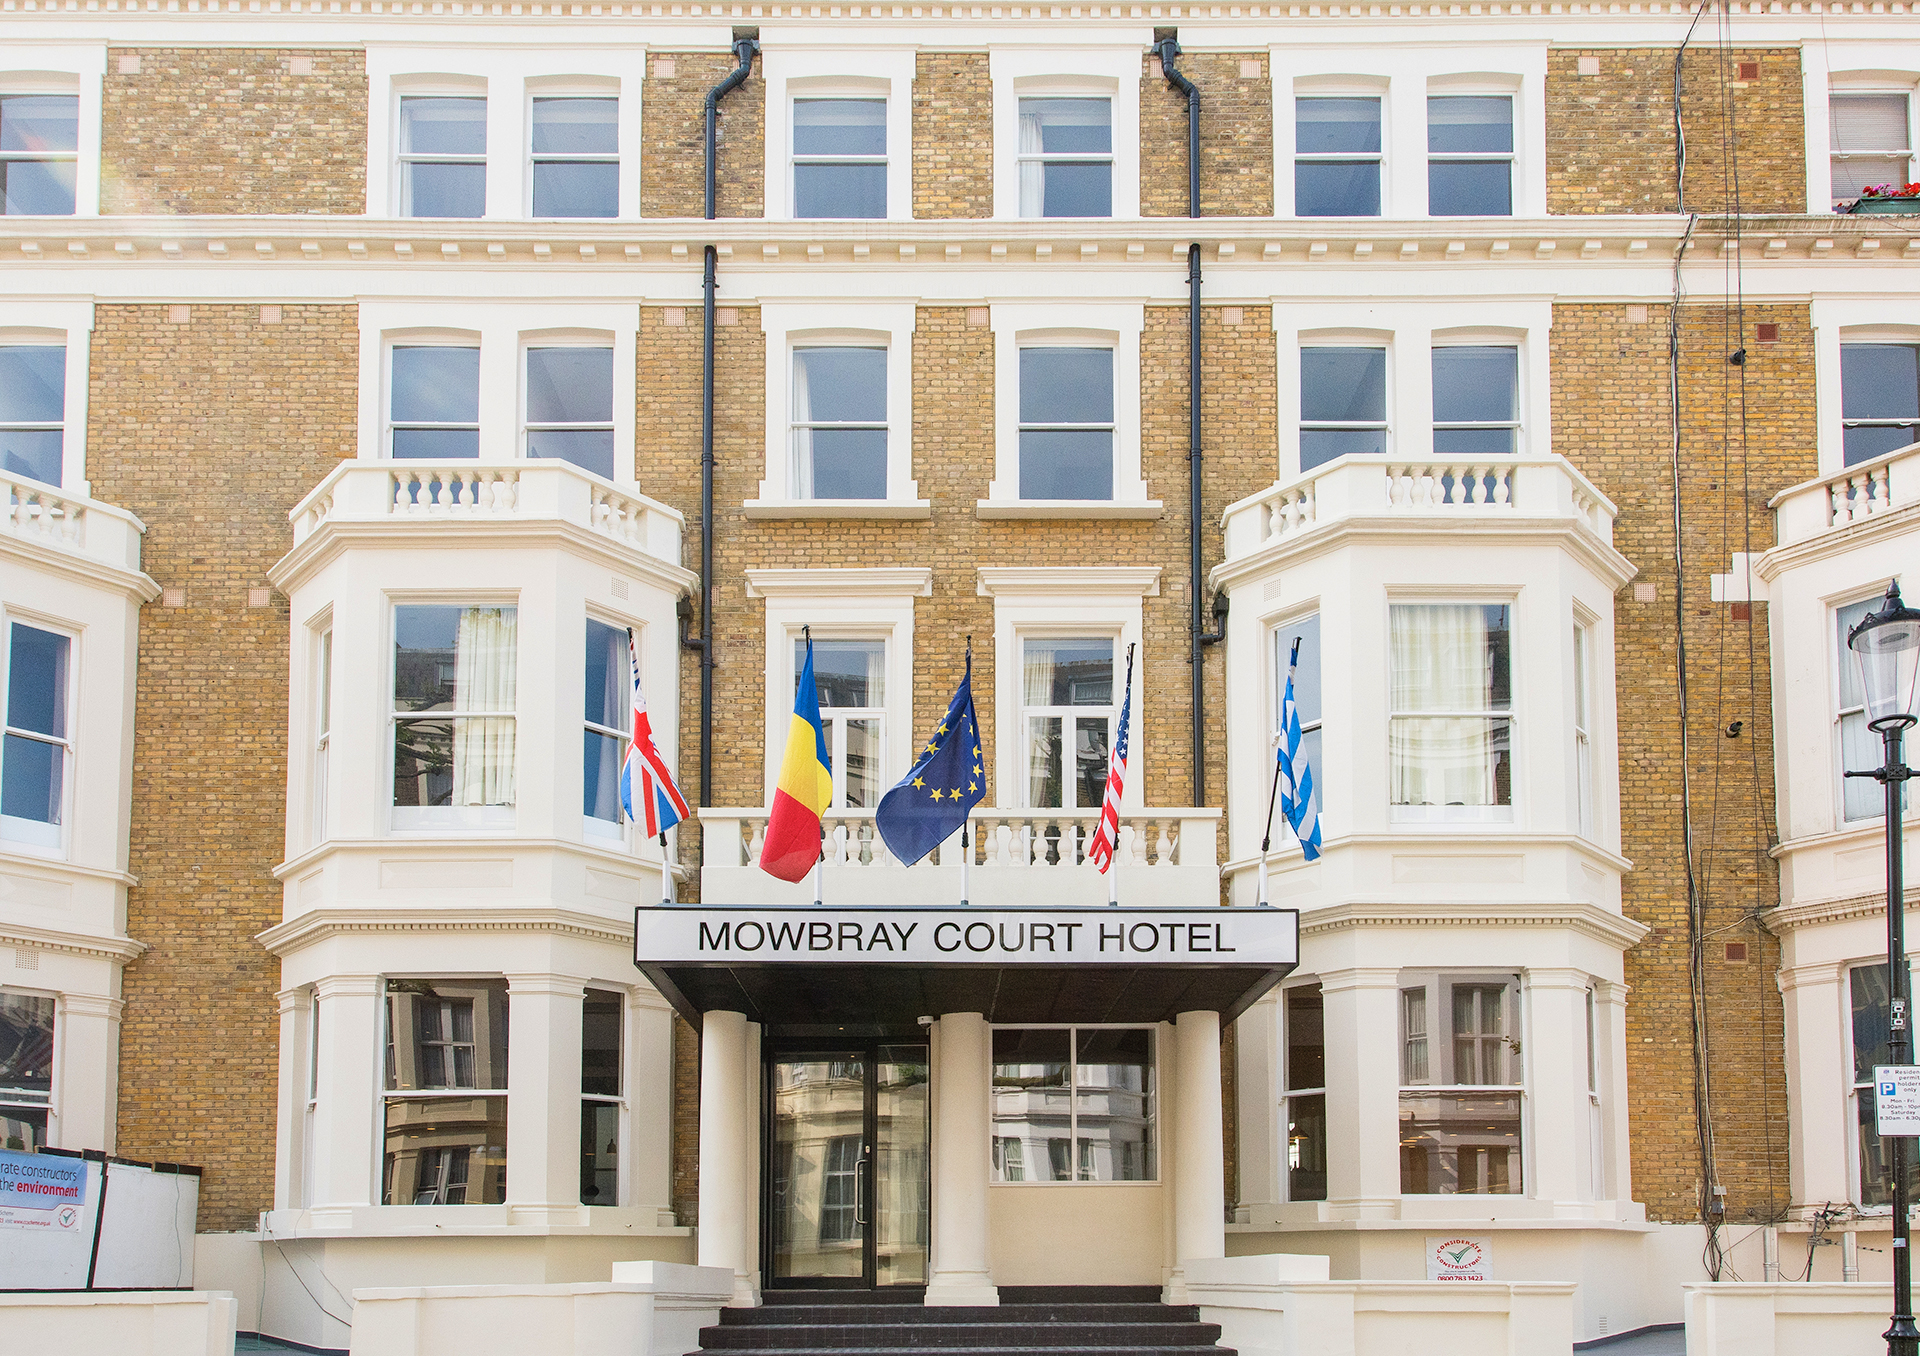 Entrance-Mowbray Court Hotel London